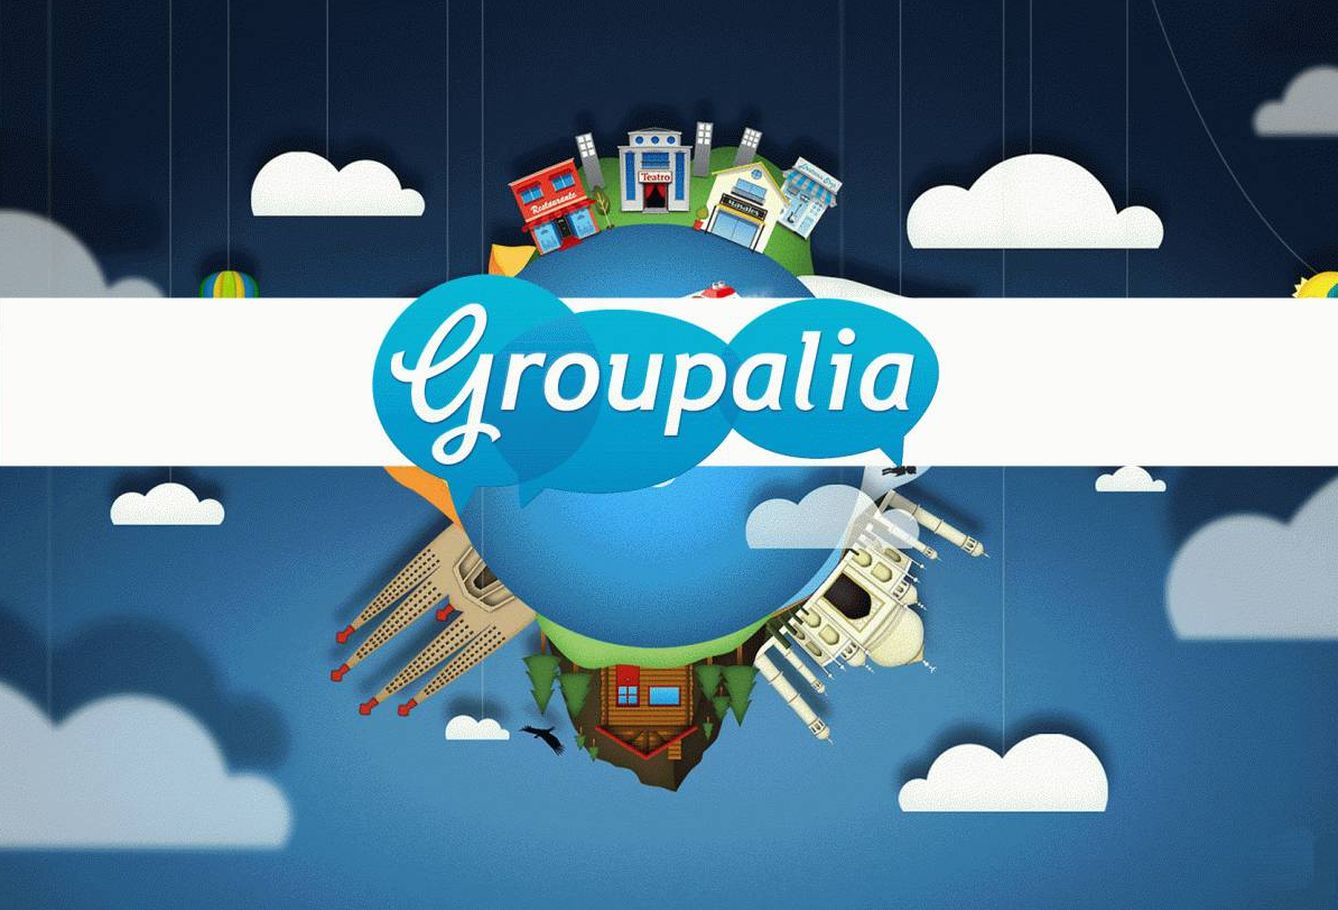 Groupalia forma parte del mismo grupo que Let's Bonus.